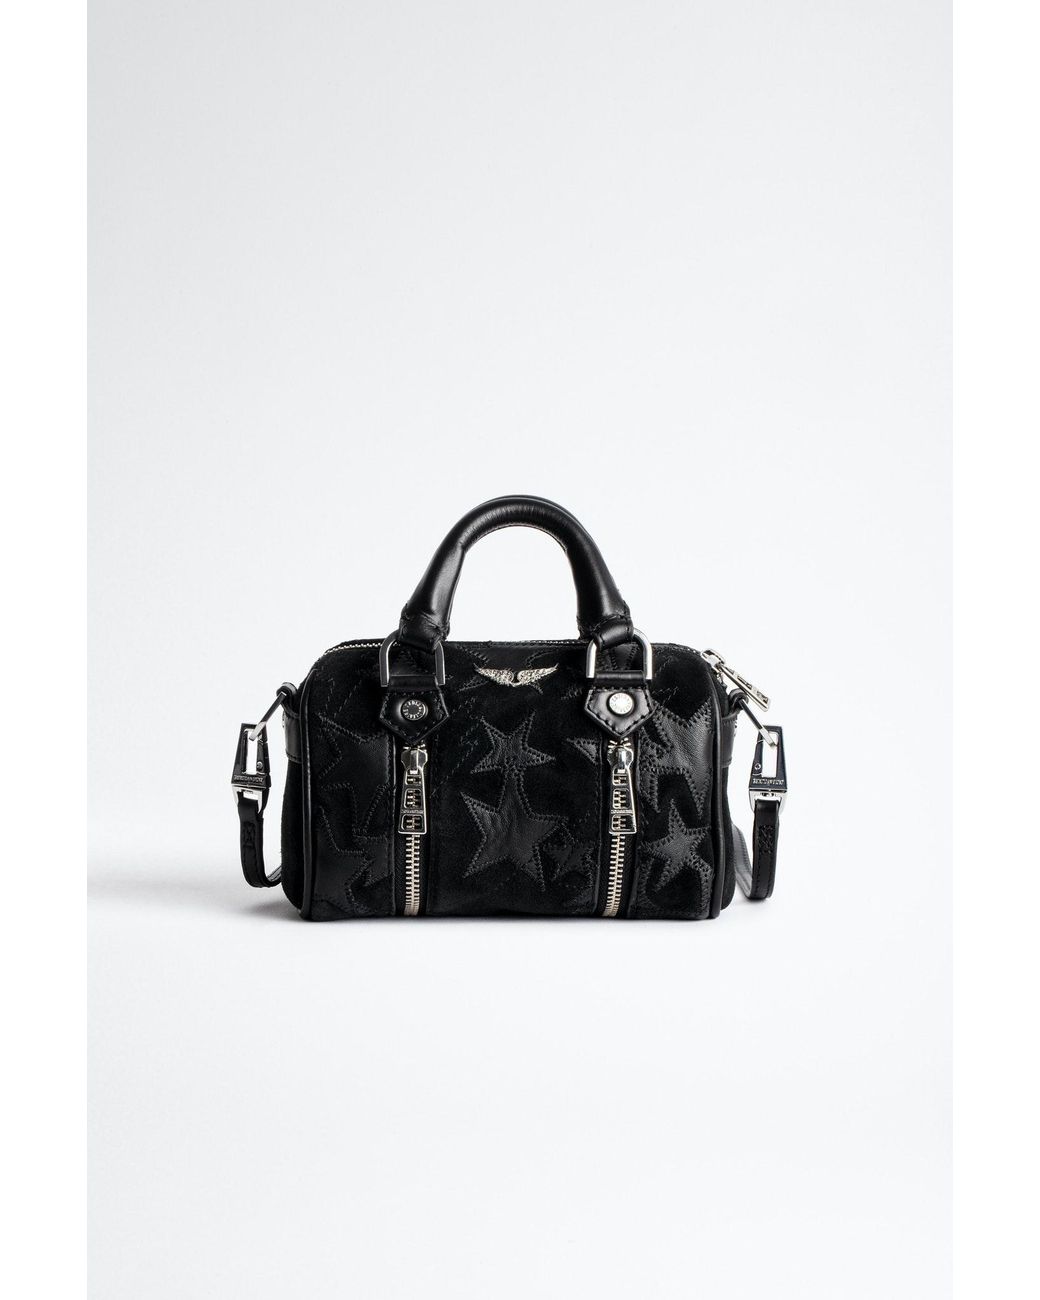 Zadig & Voltaire Sunny Nano Patchwork Bag in Black | Lyst UK